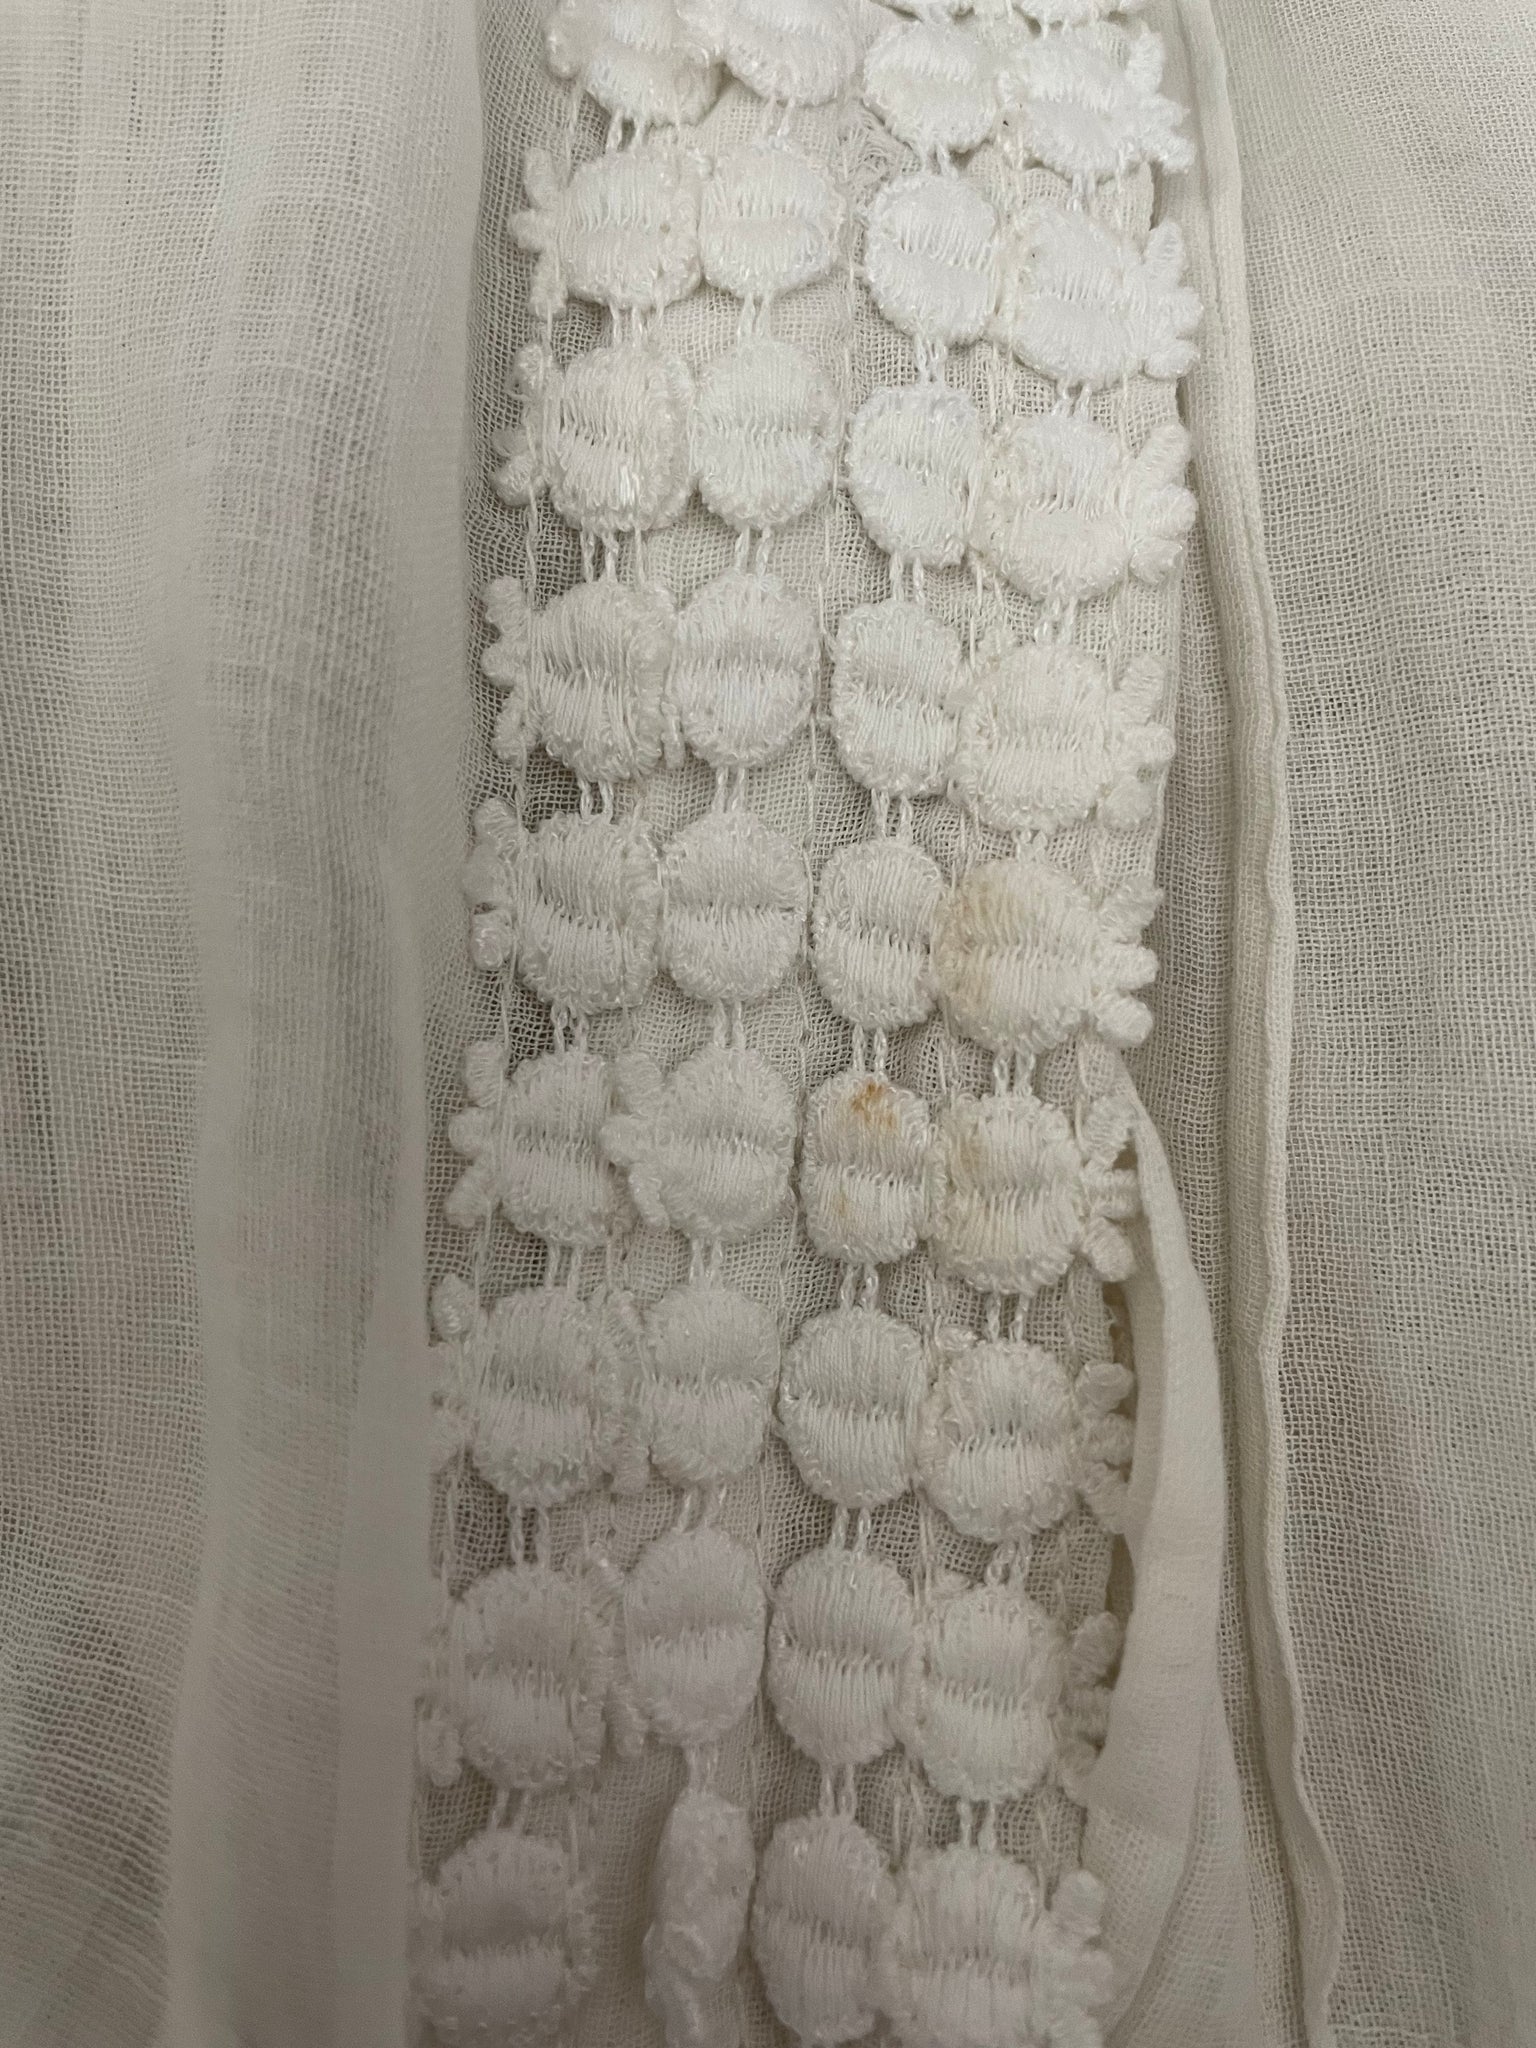 Antique 1910s Edwardian Whitework Cotton Lawn Sailor Collar Dress